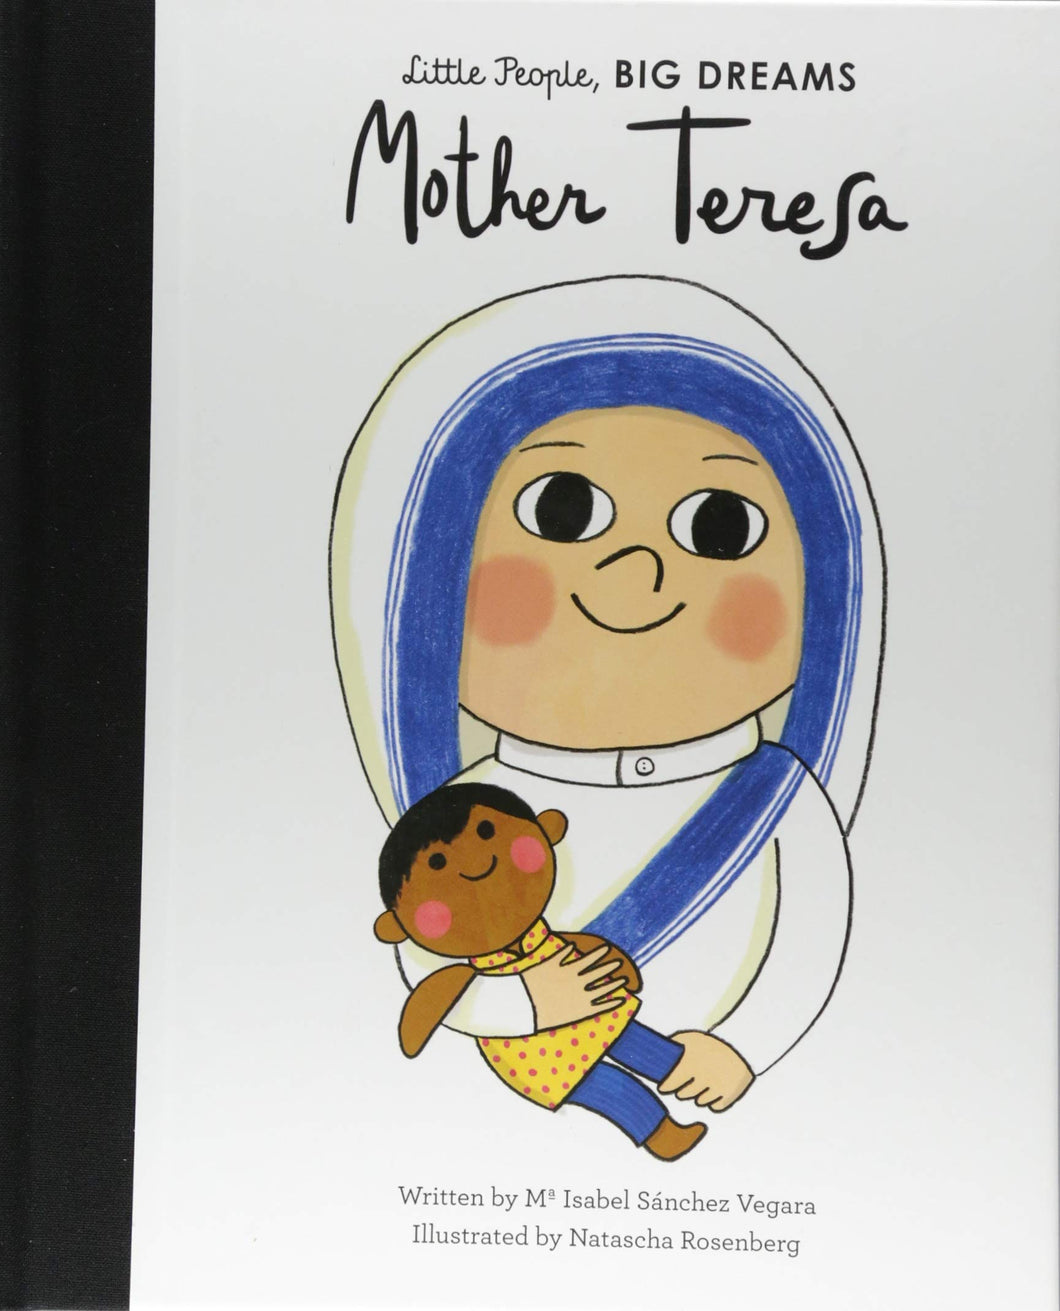 Little People, Big Dreams Mother Teresa